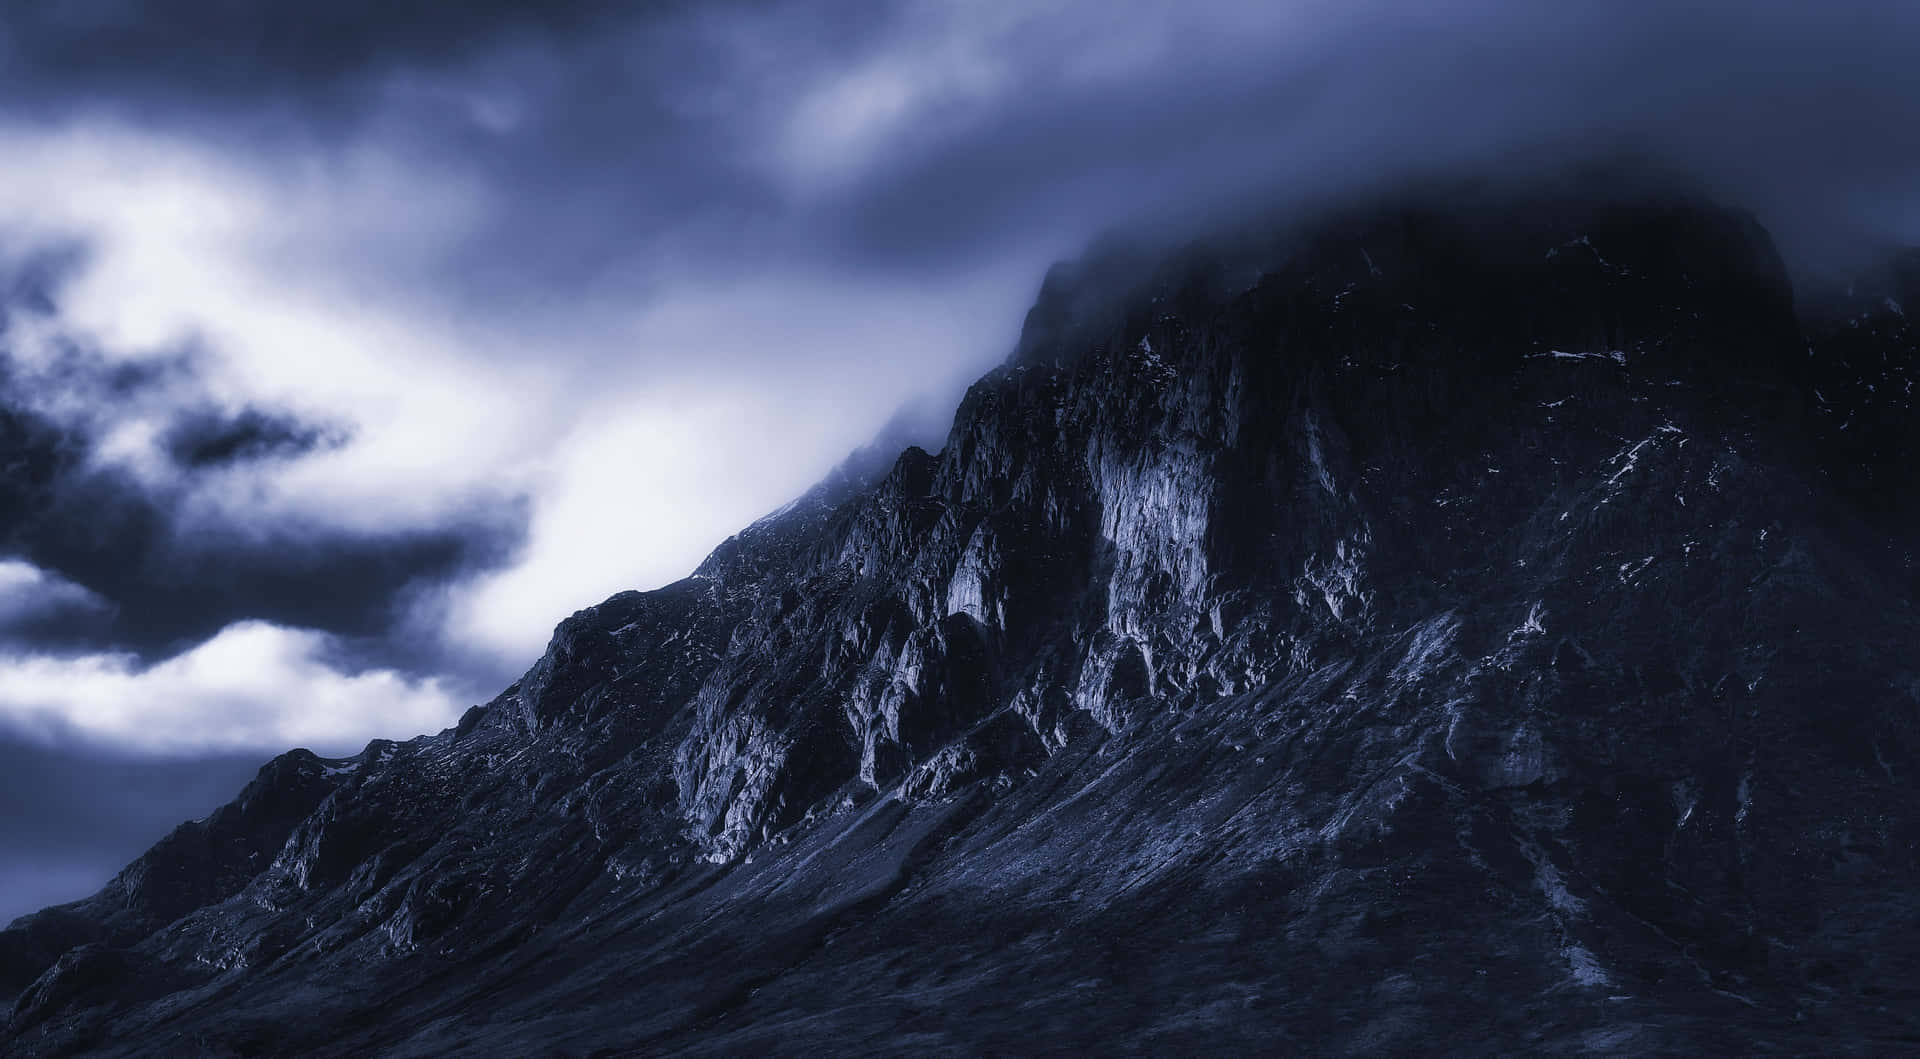 Majestic Dark Mountain under a Starry Night Sky Wallpaper